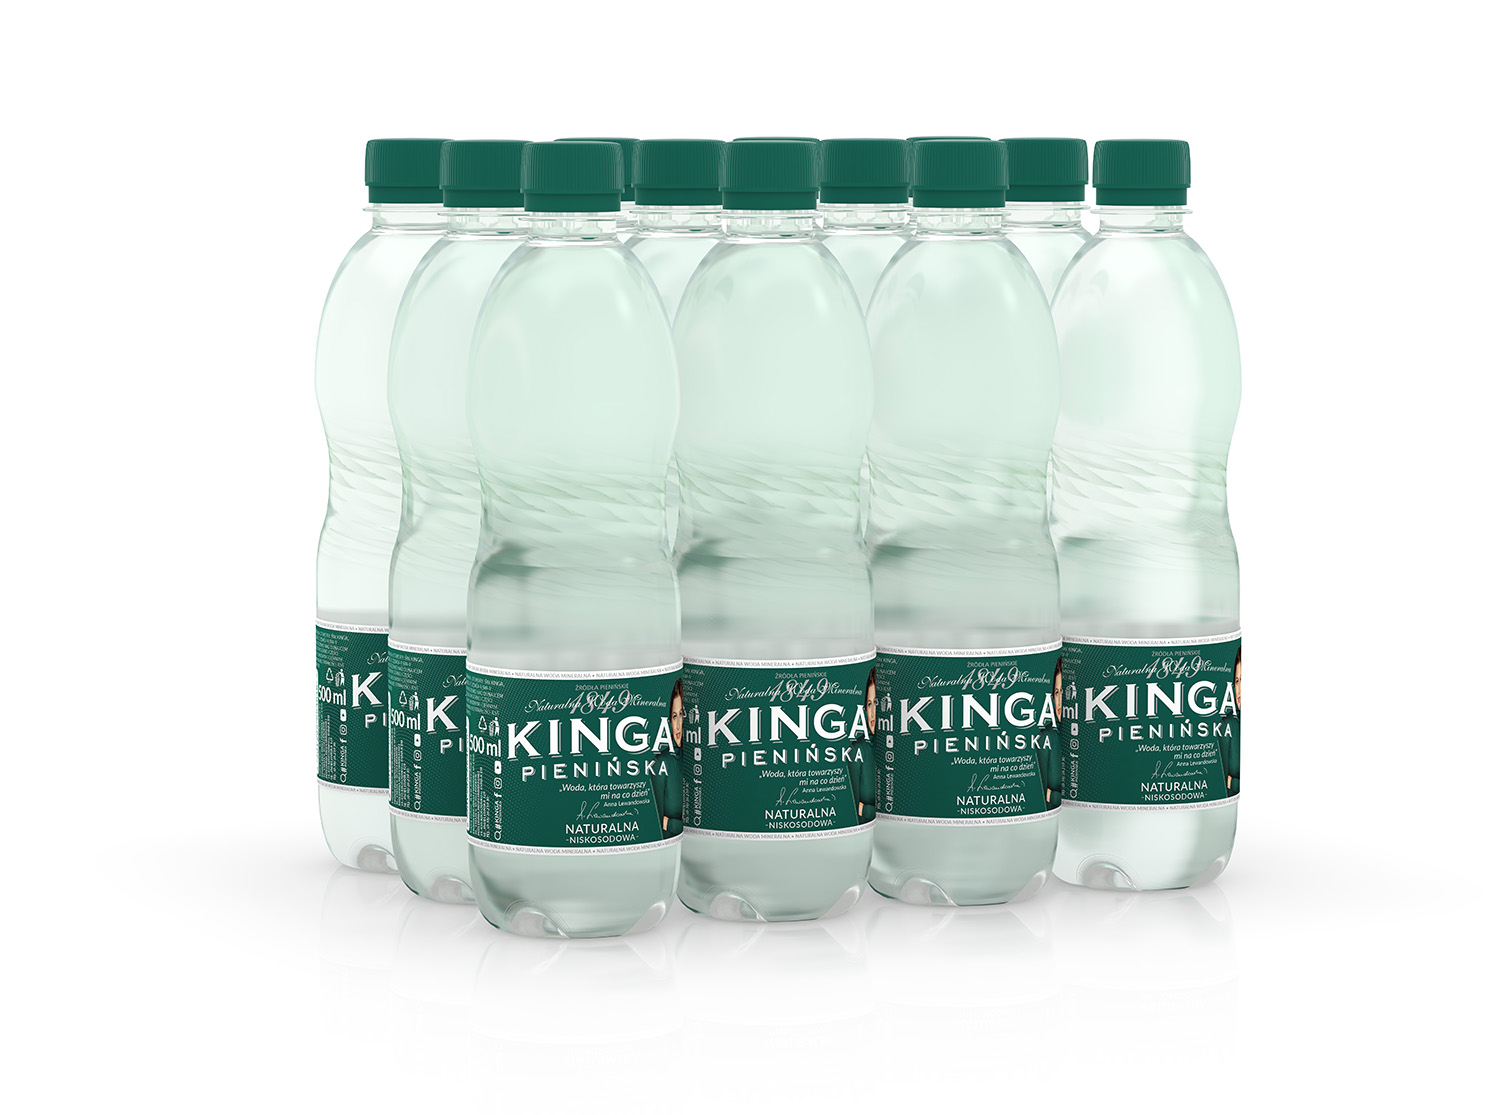 Water bottles rendered in Boxshot